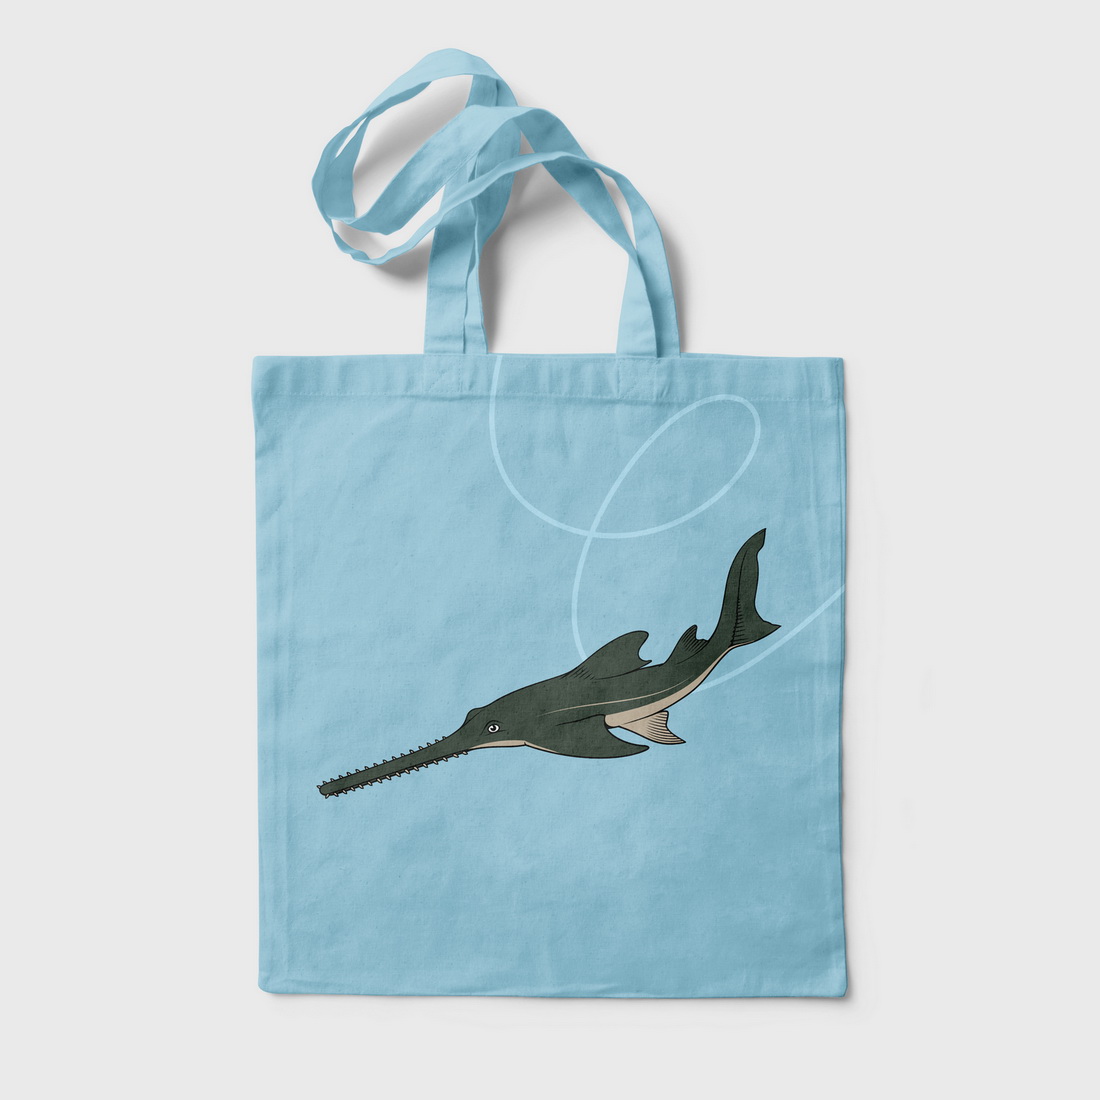 Image of bag with colorful shark print.